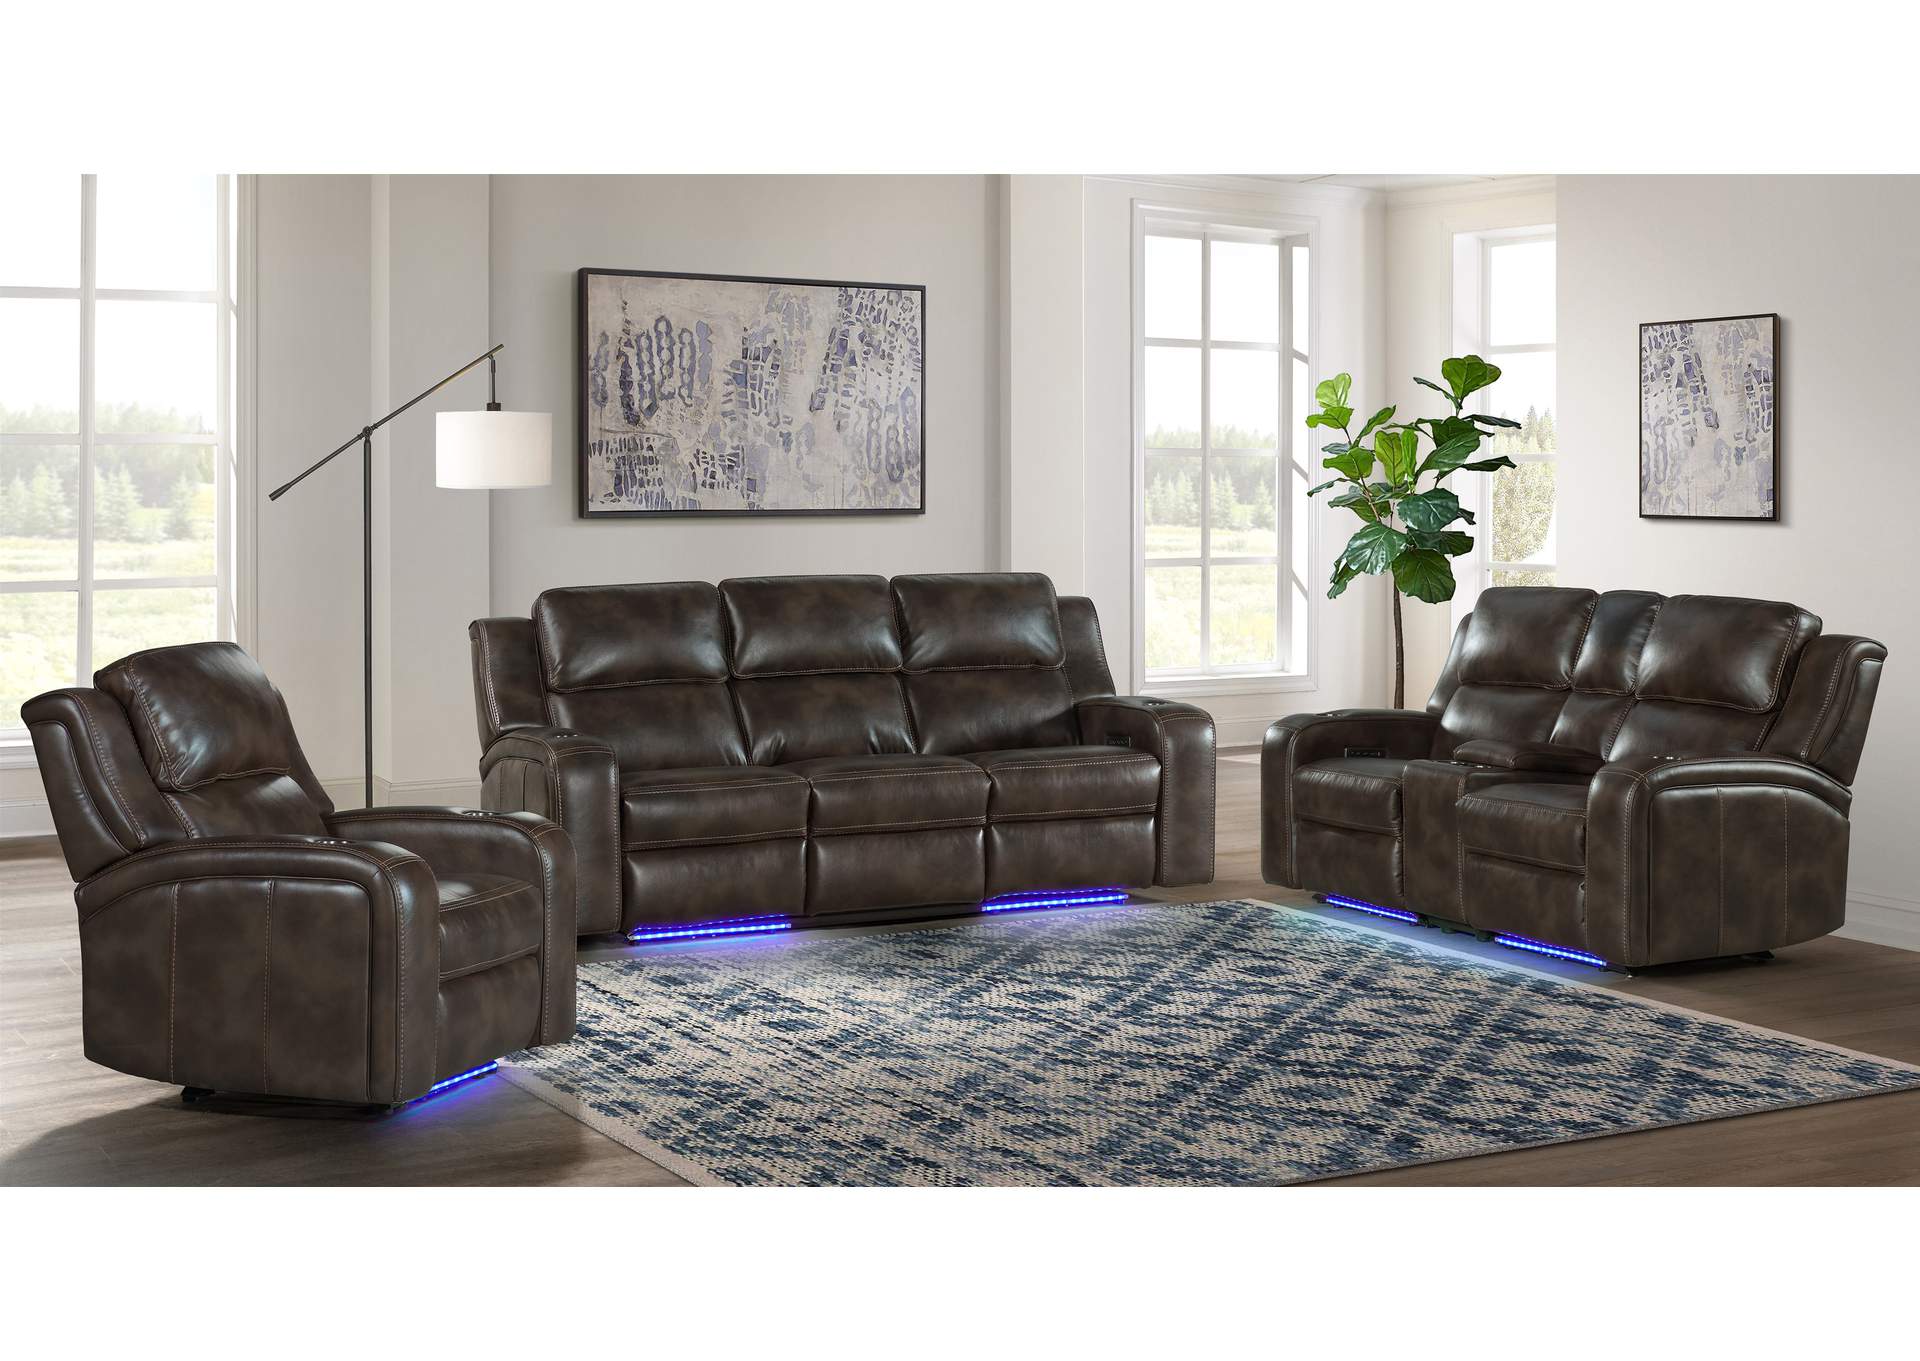 Dual-Pwr Recliner Sofa w/Drop,Intercon Furniture